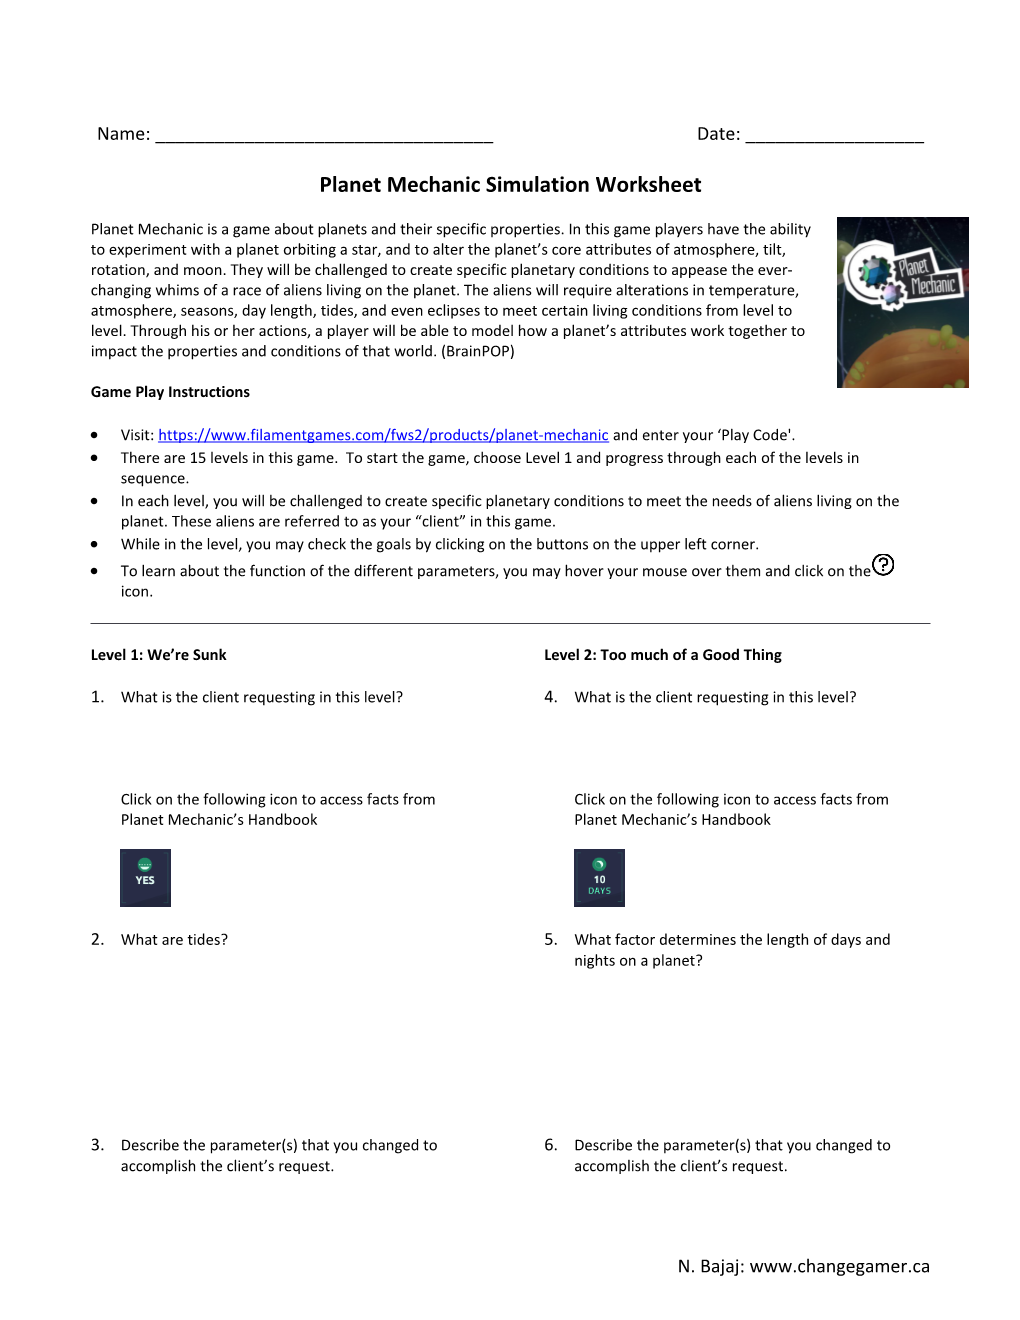 Planet Mechanic Simulation Worksheet